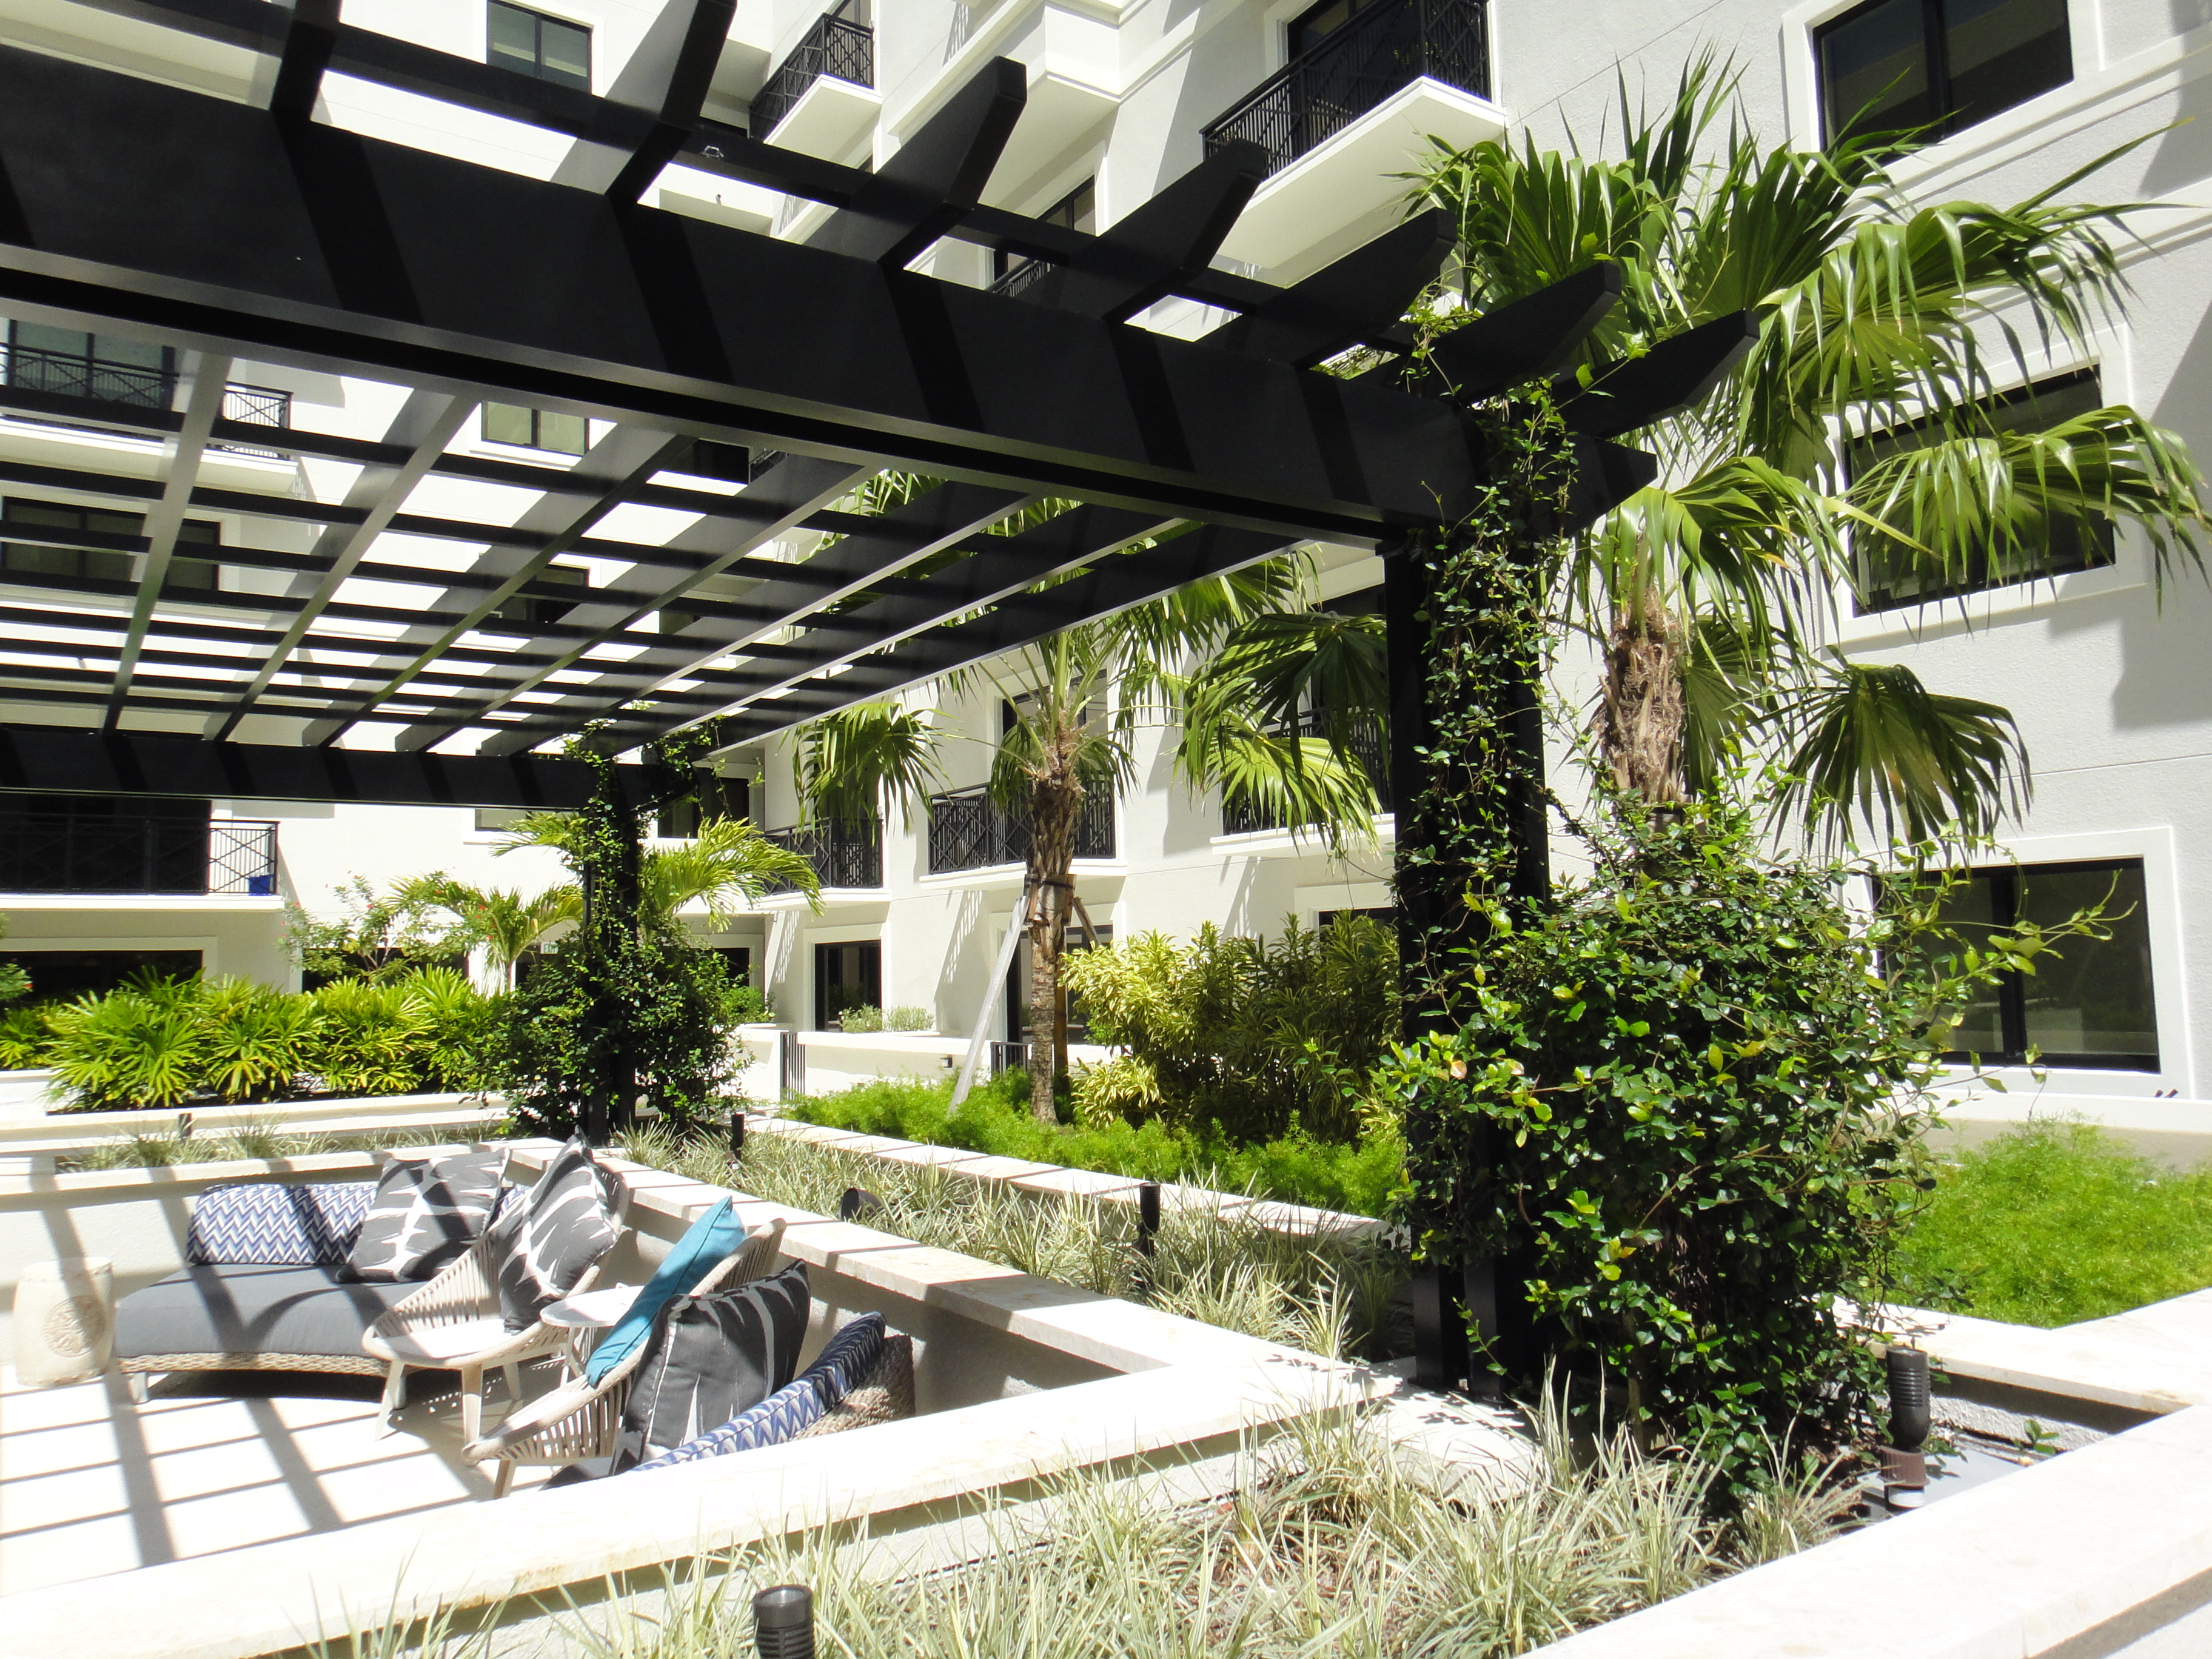 Paseo de la Riviera | Thesis Hotel (mixed use) – Coral Gables, Florida